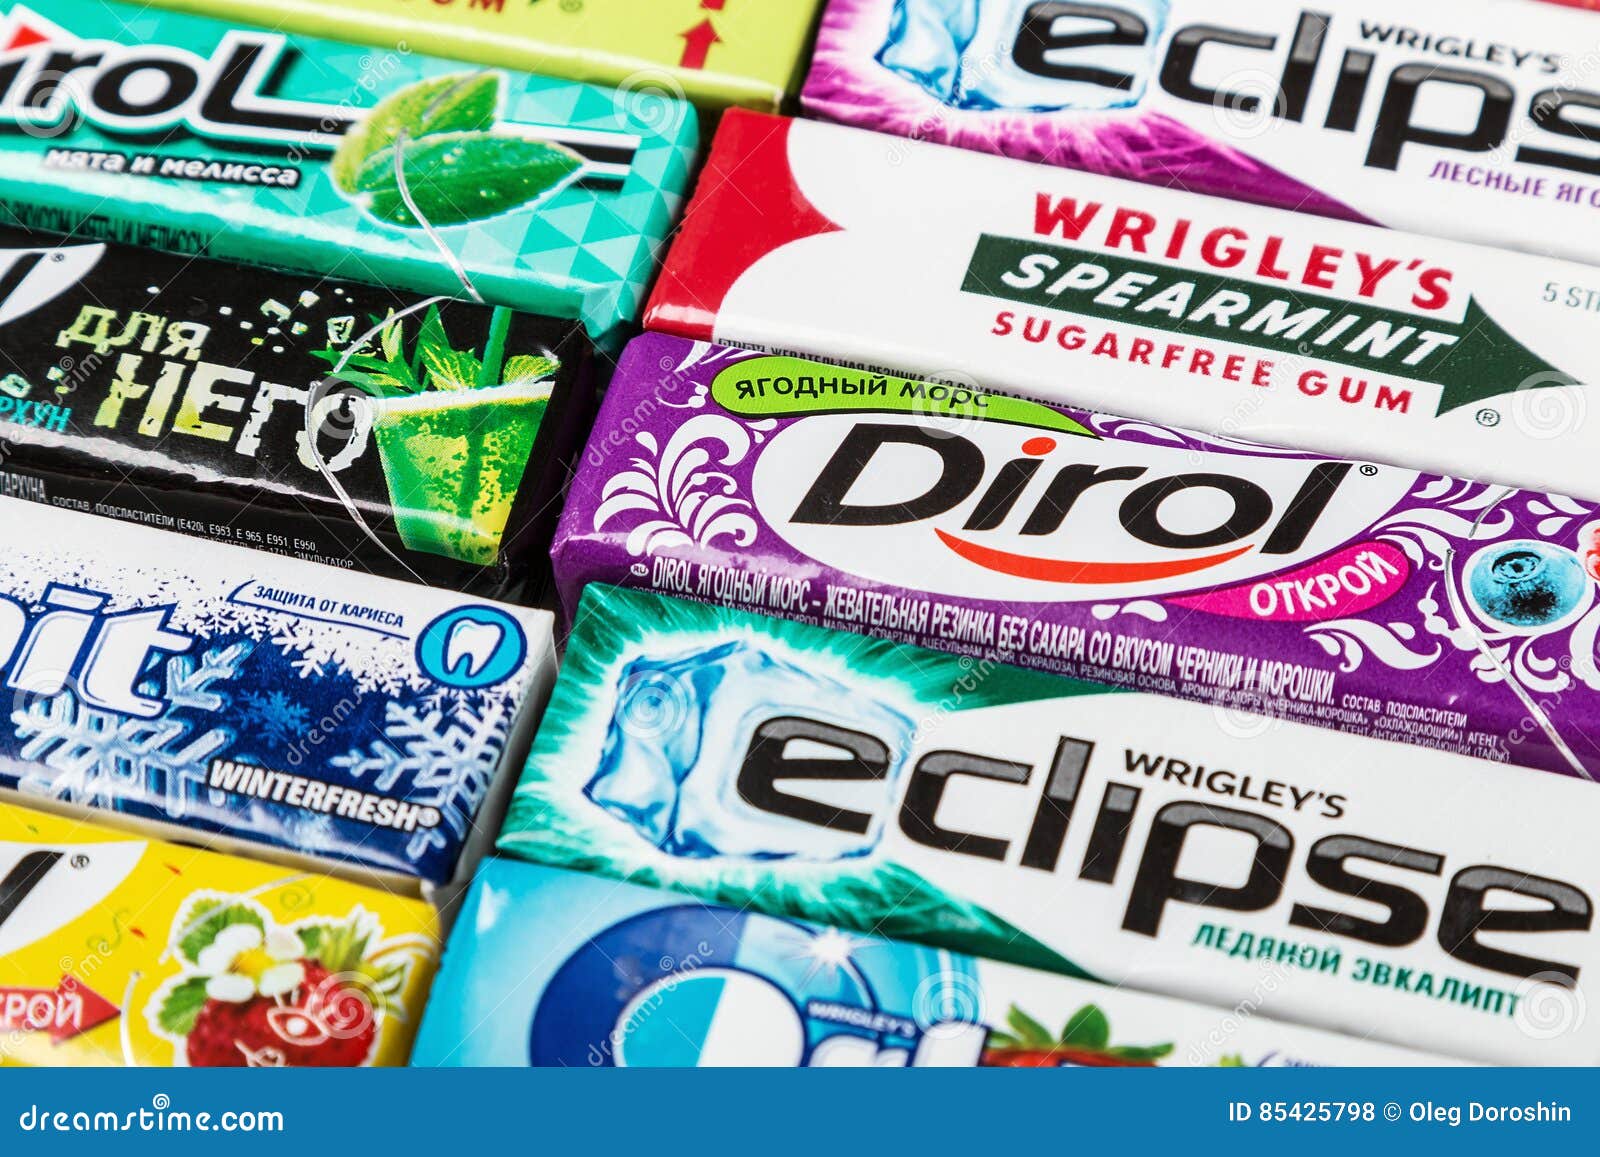 Chewing gum various brands Orbit, Extra, Eclipse, Freedent